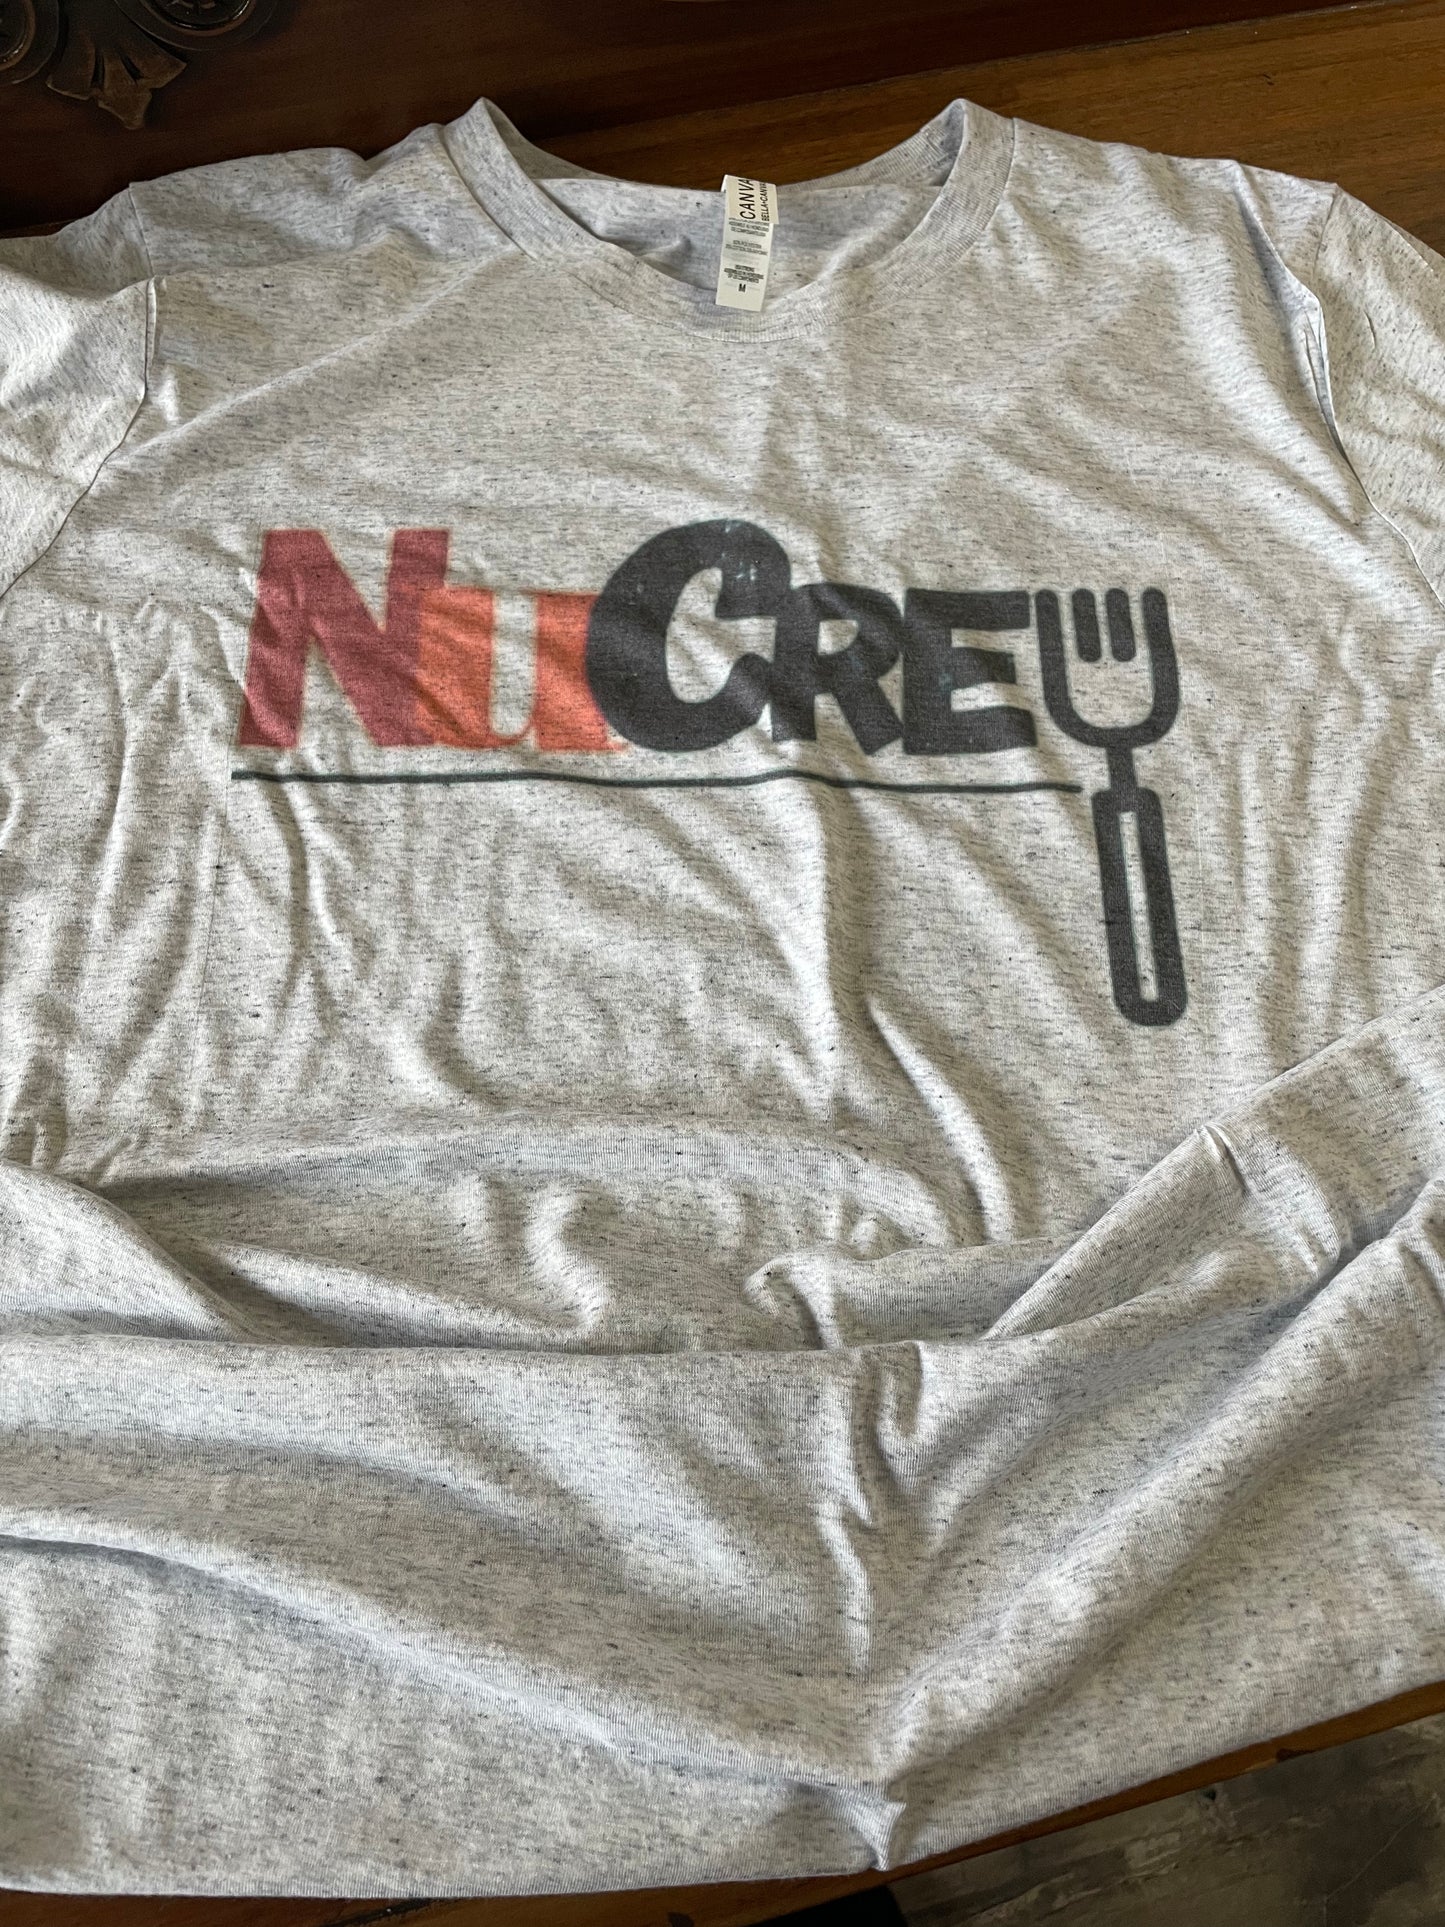 NuCrew Shirt